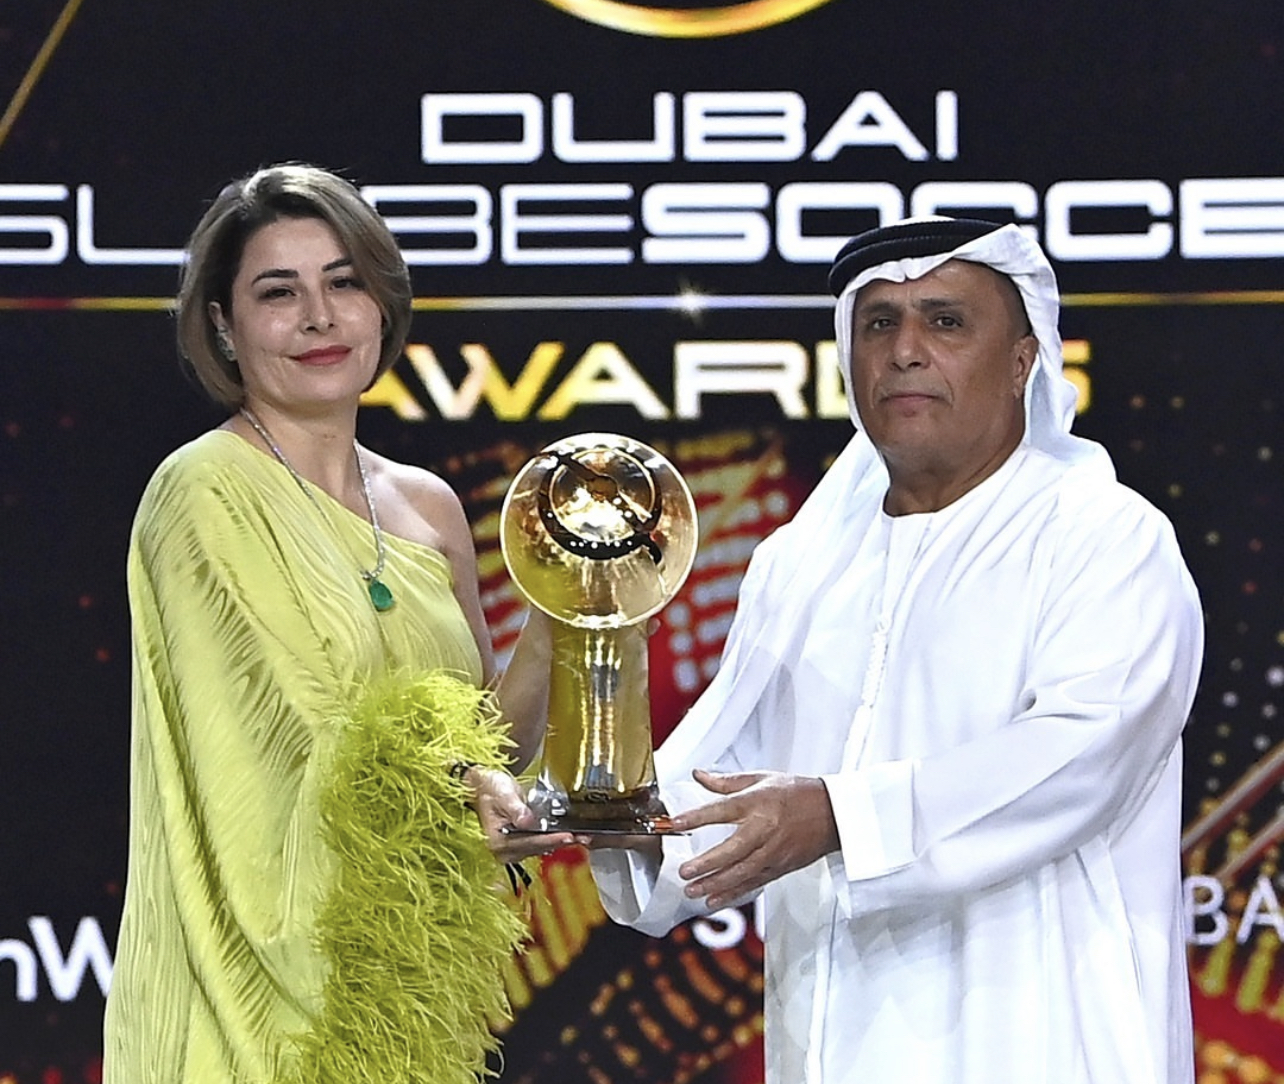 Globe Soccer Awards : Rafaela Pimenta élue Meilleur Agent